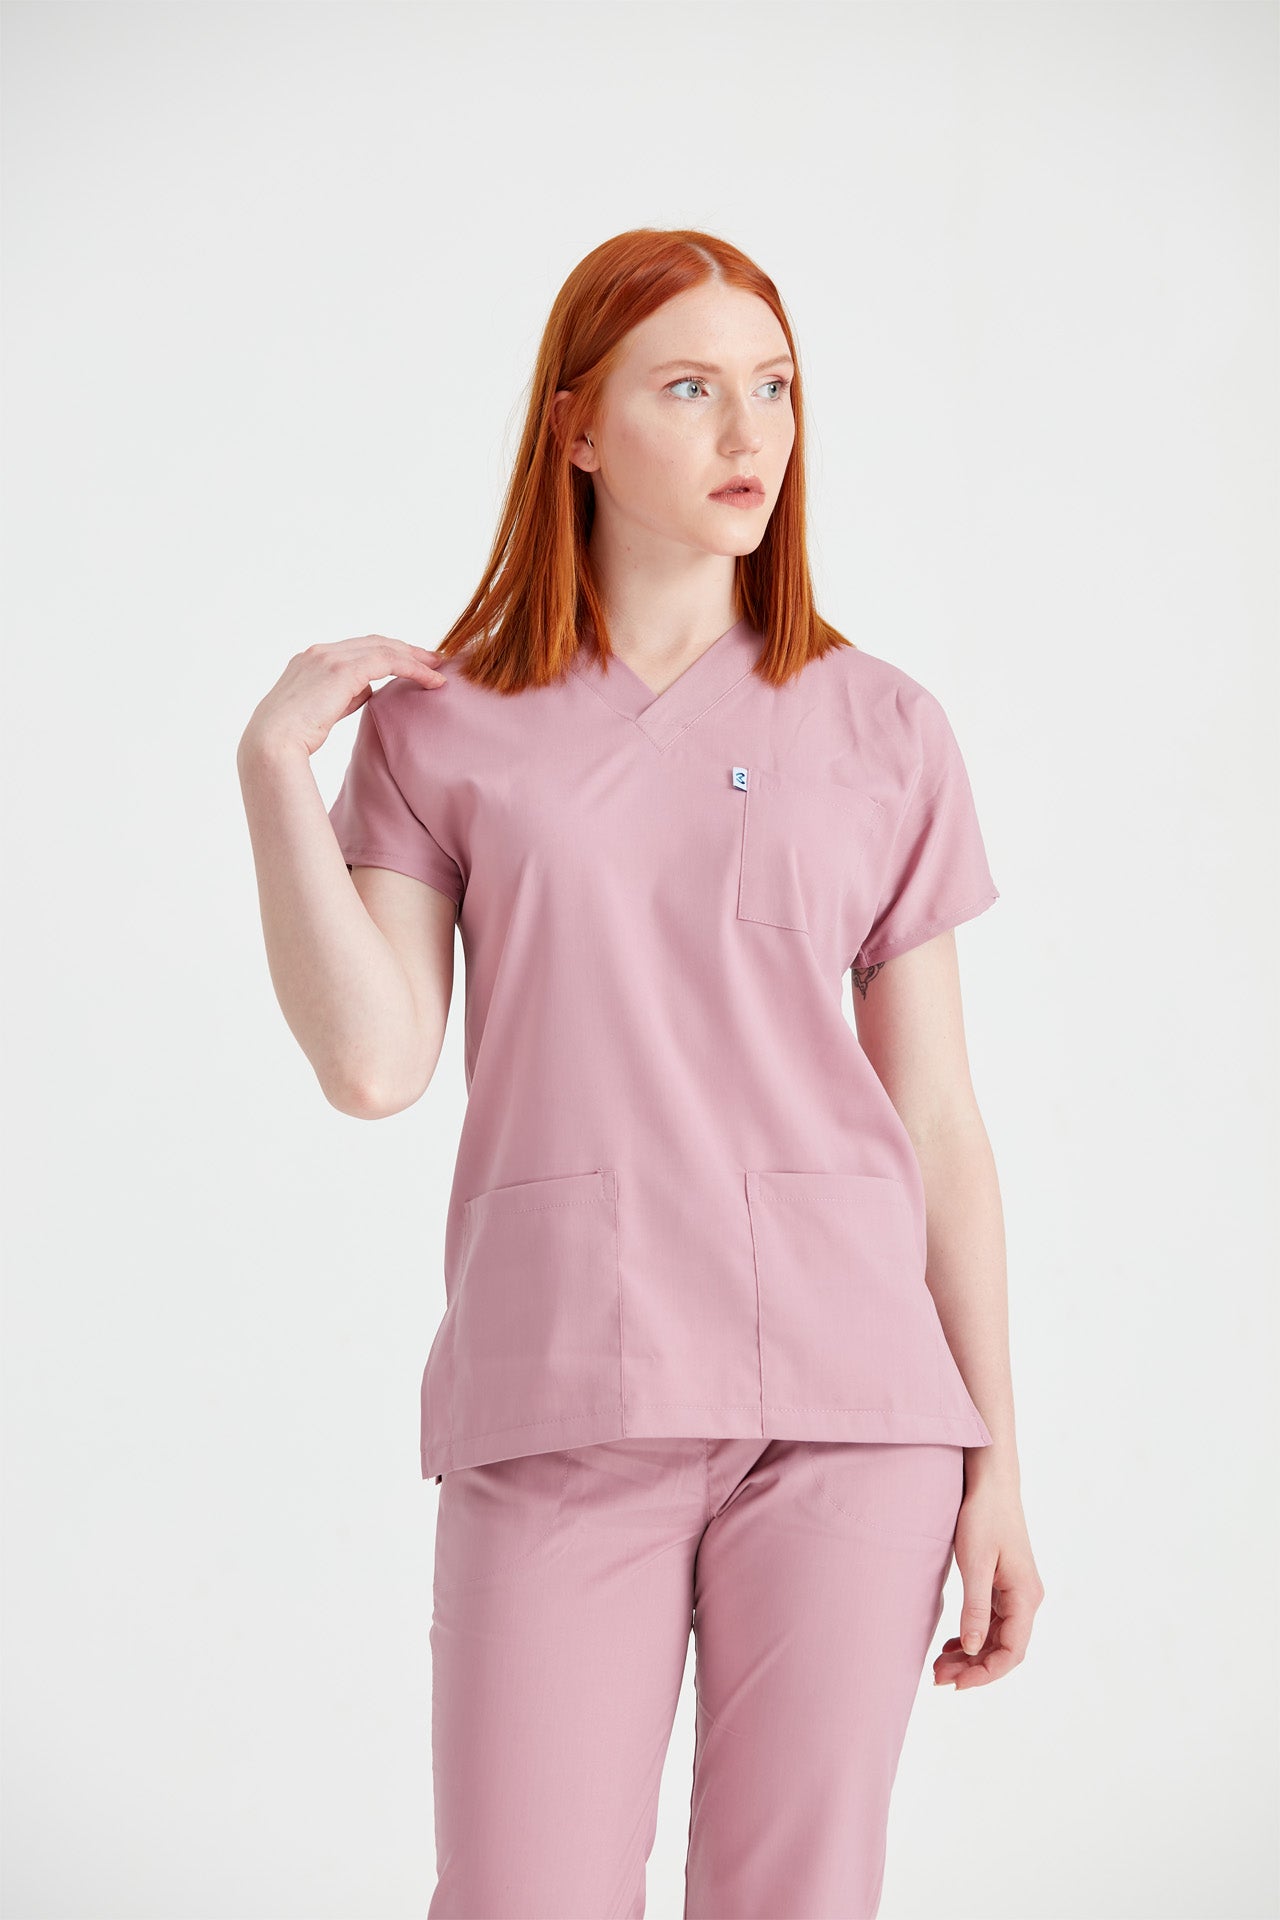 Asistenta medicala imbracata in costum medical roz din elastan Rose, vedere din fata